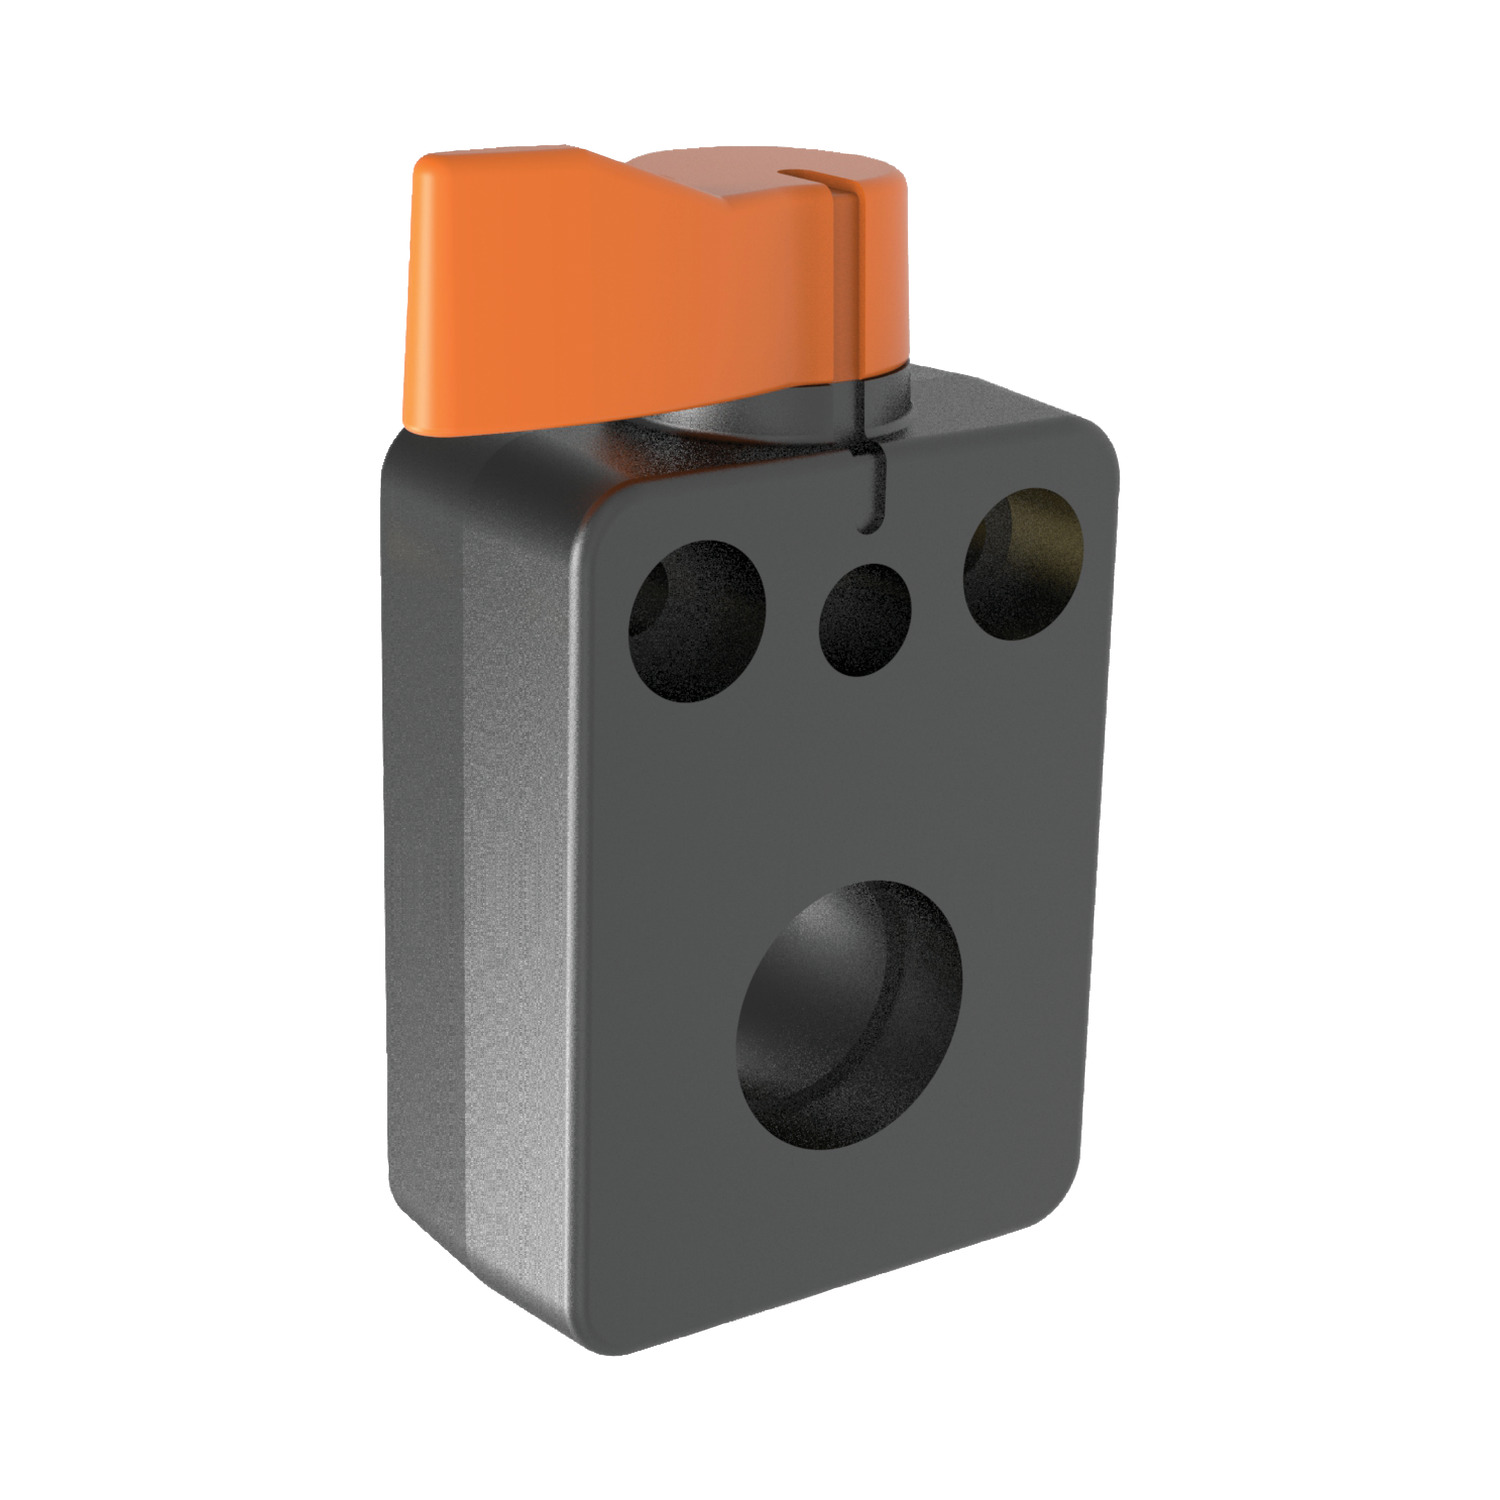 33980.W1314 One Touch Spindle Lock, Orange Handle orange handle - 14 dia - M4 EC:20192105 WG:05063055506984